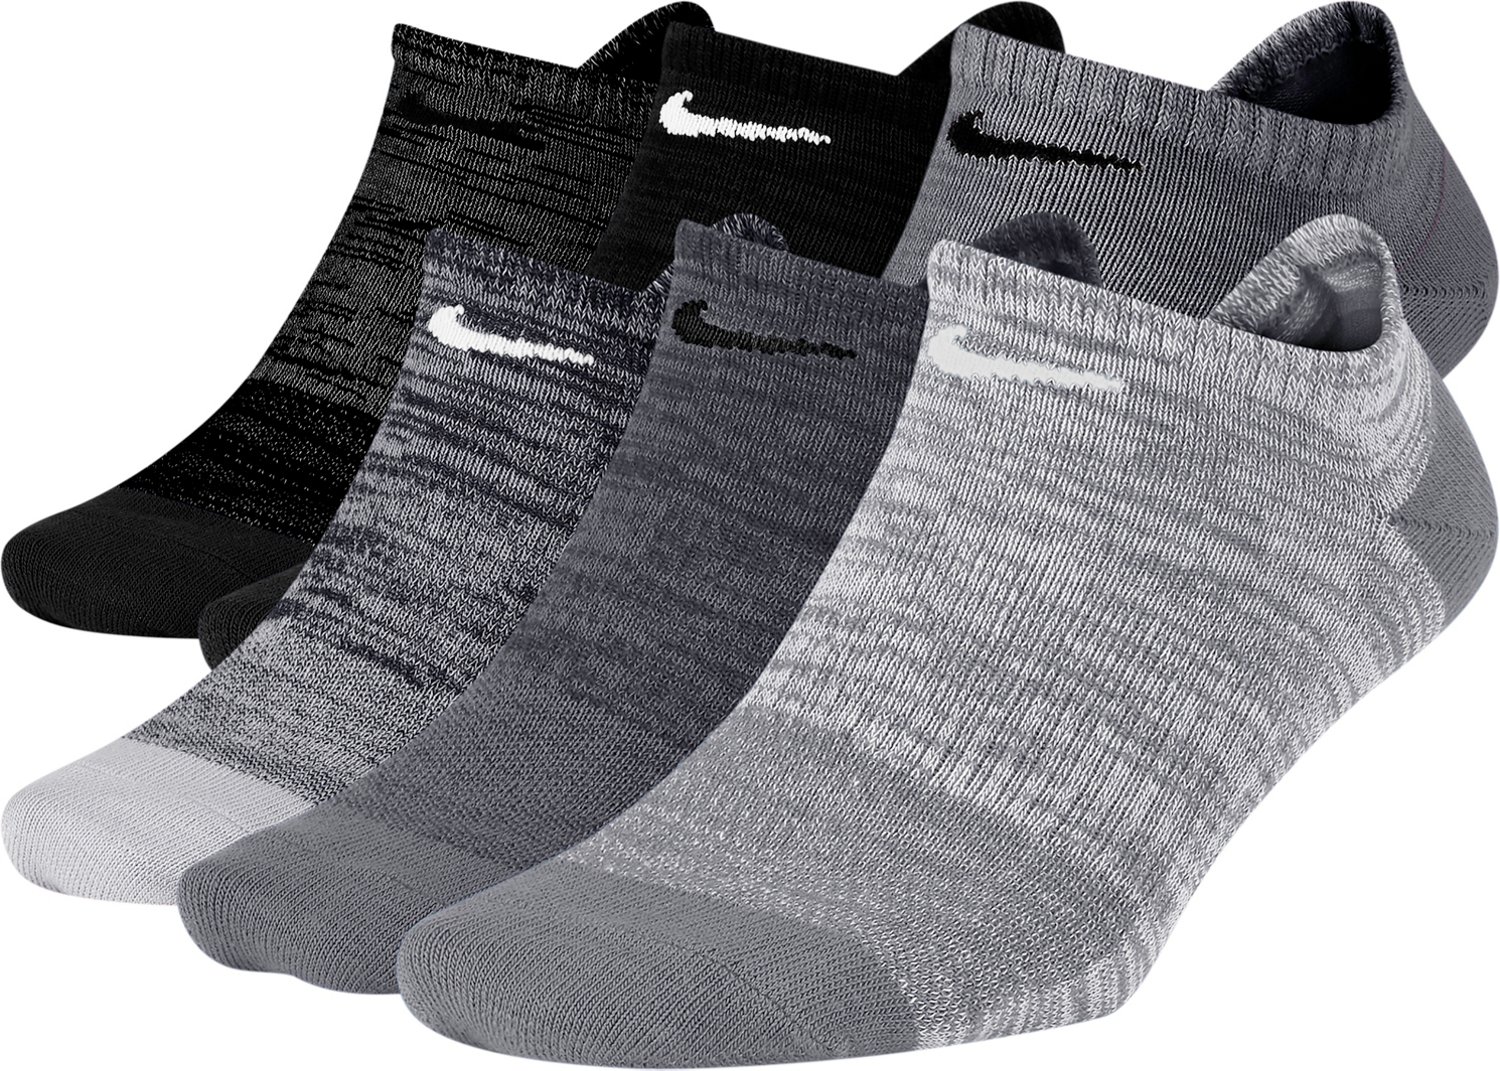 Nike Lightweight No-Show Training Socks 6 Pack                                                                                  